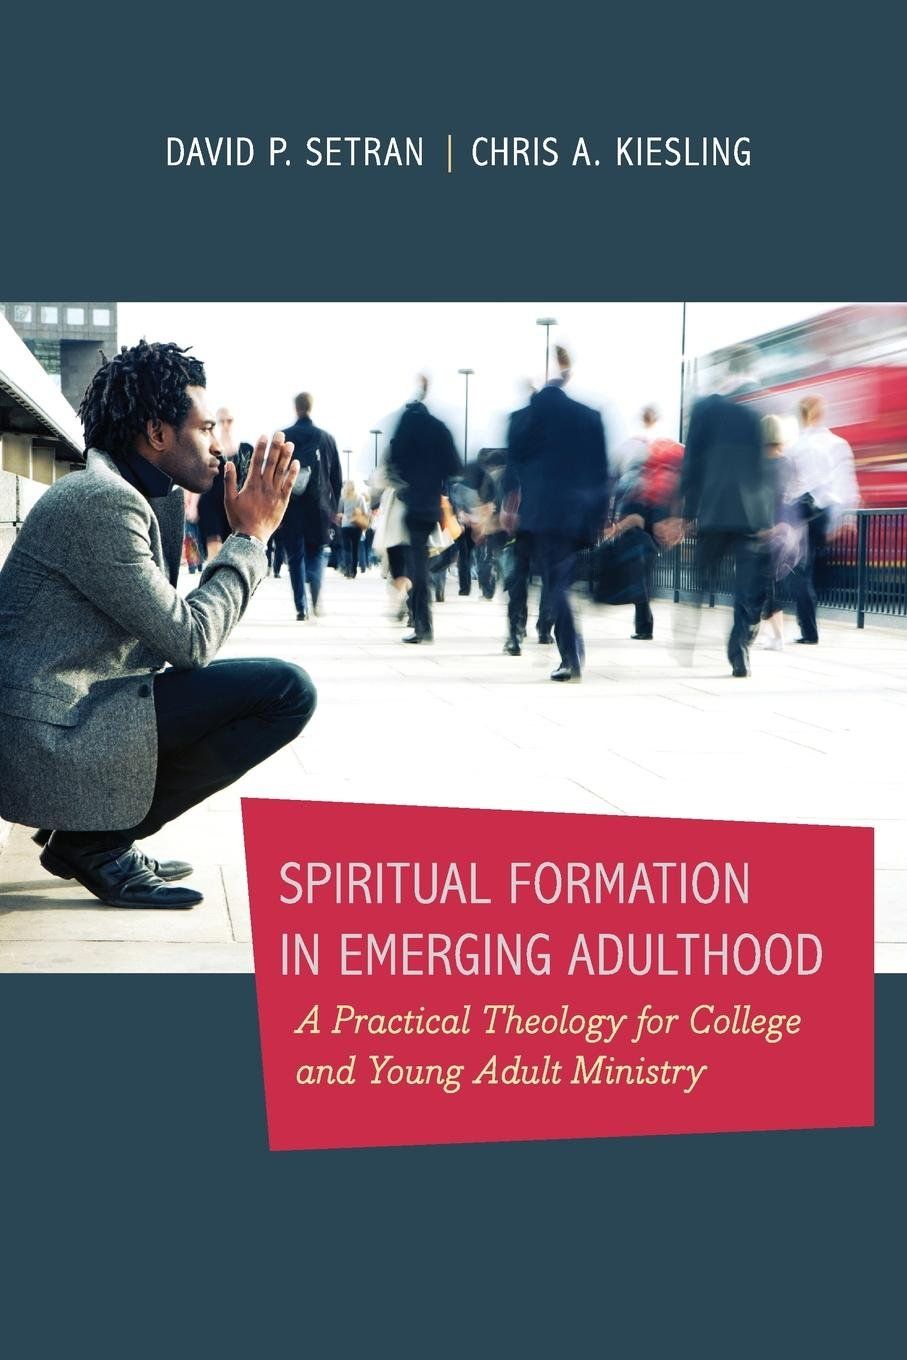 Mature adult ministry survey